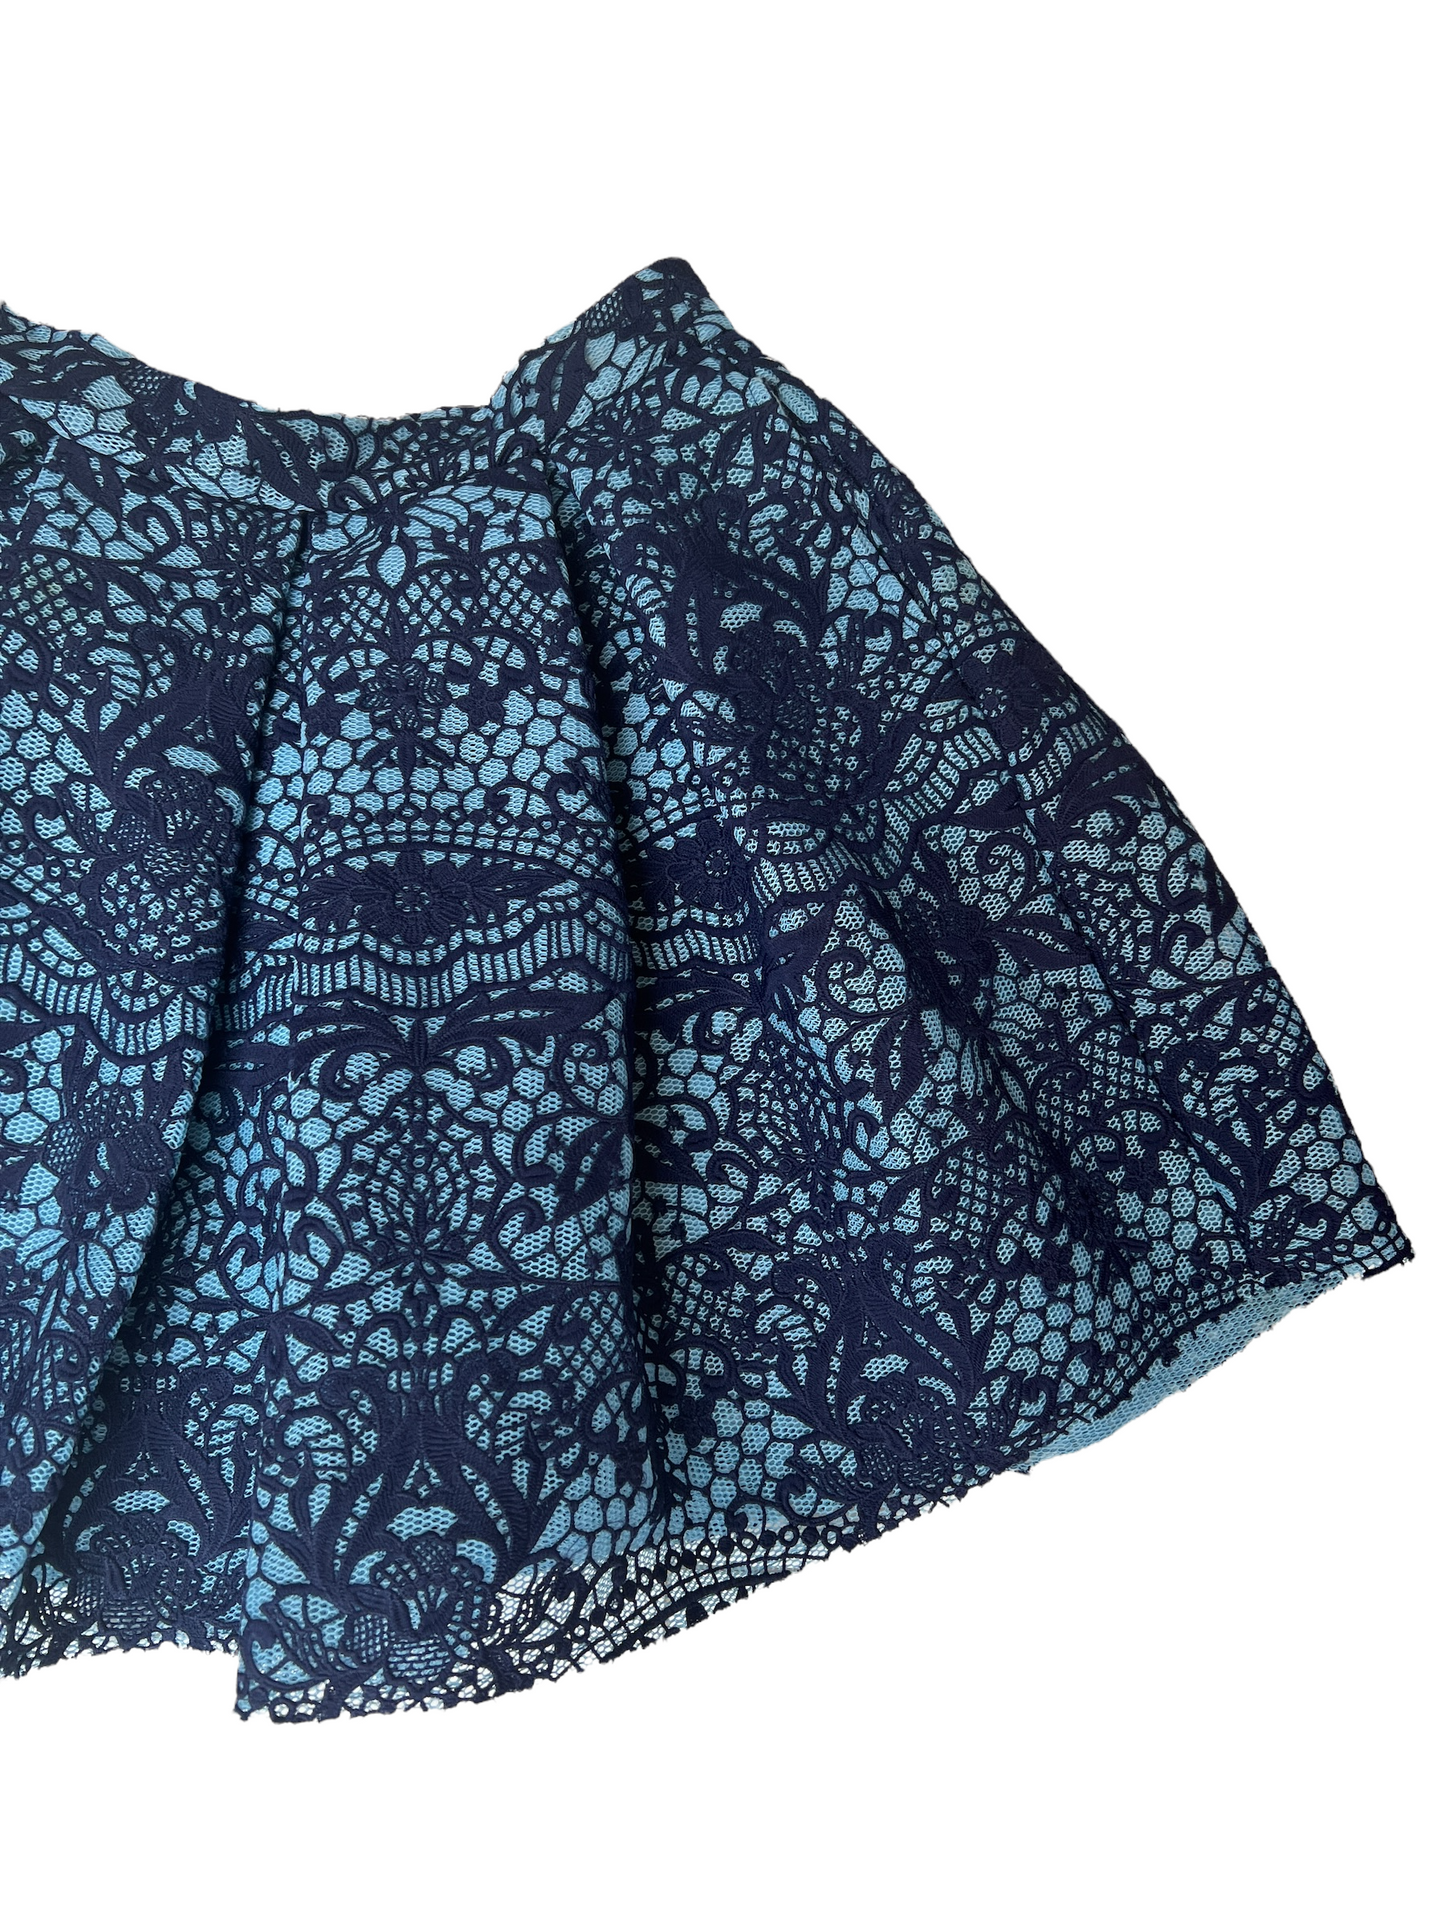 Blue Lace Skirt - 3